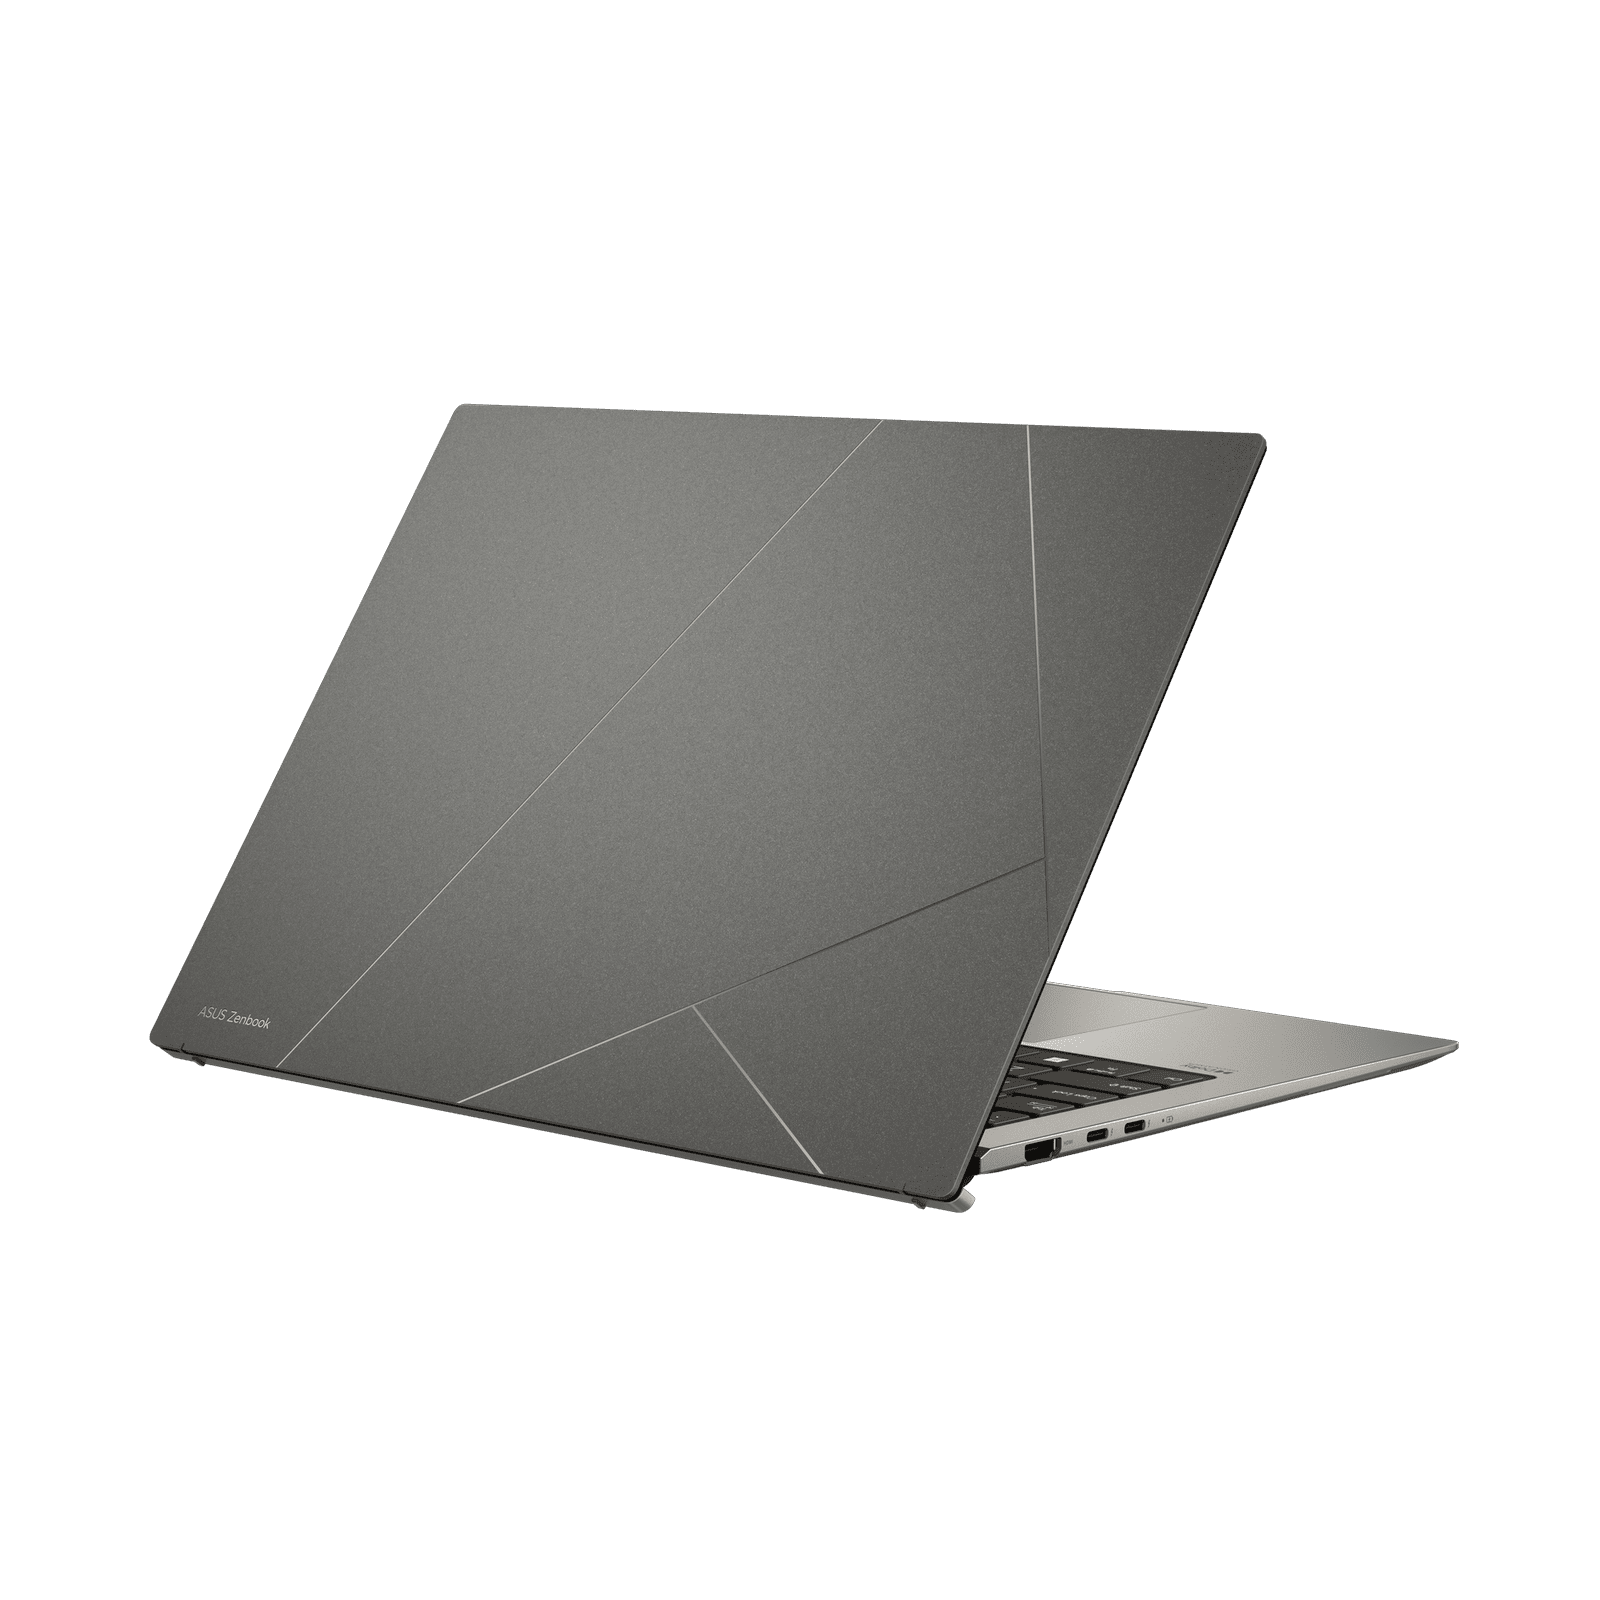 ASUS Zenbook S 13 OLED